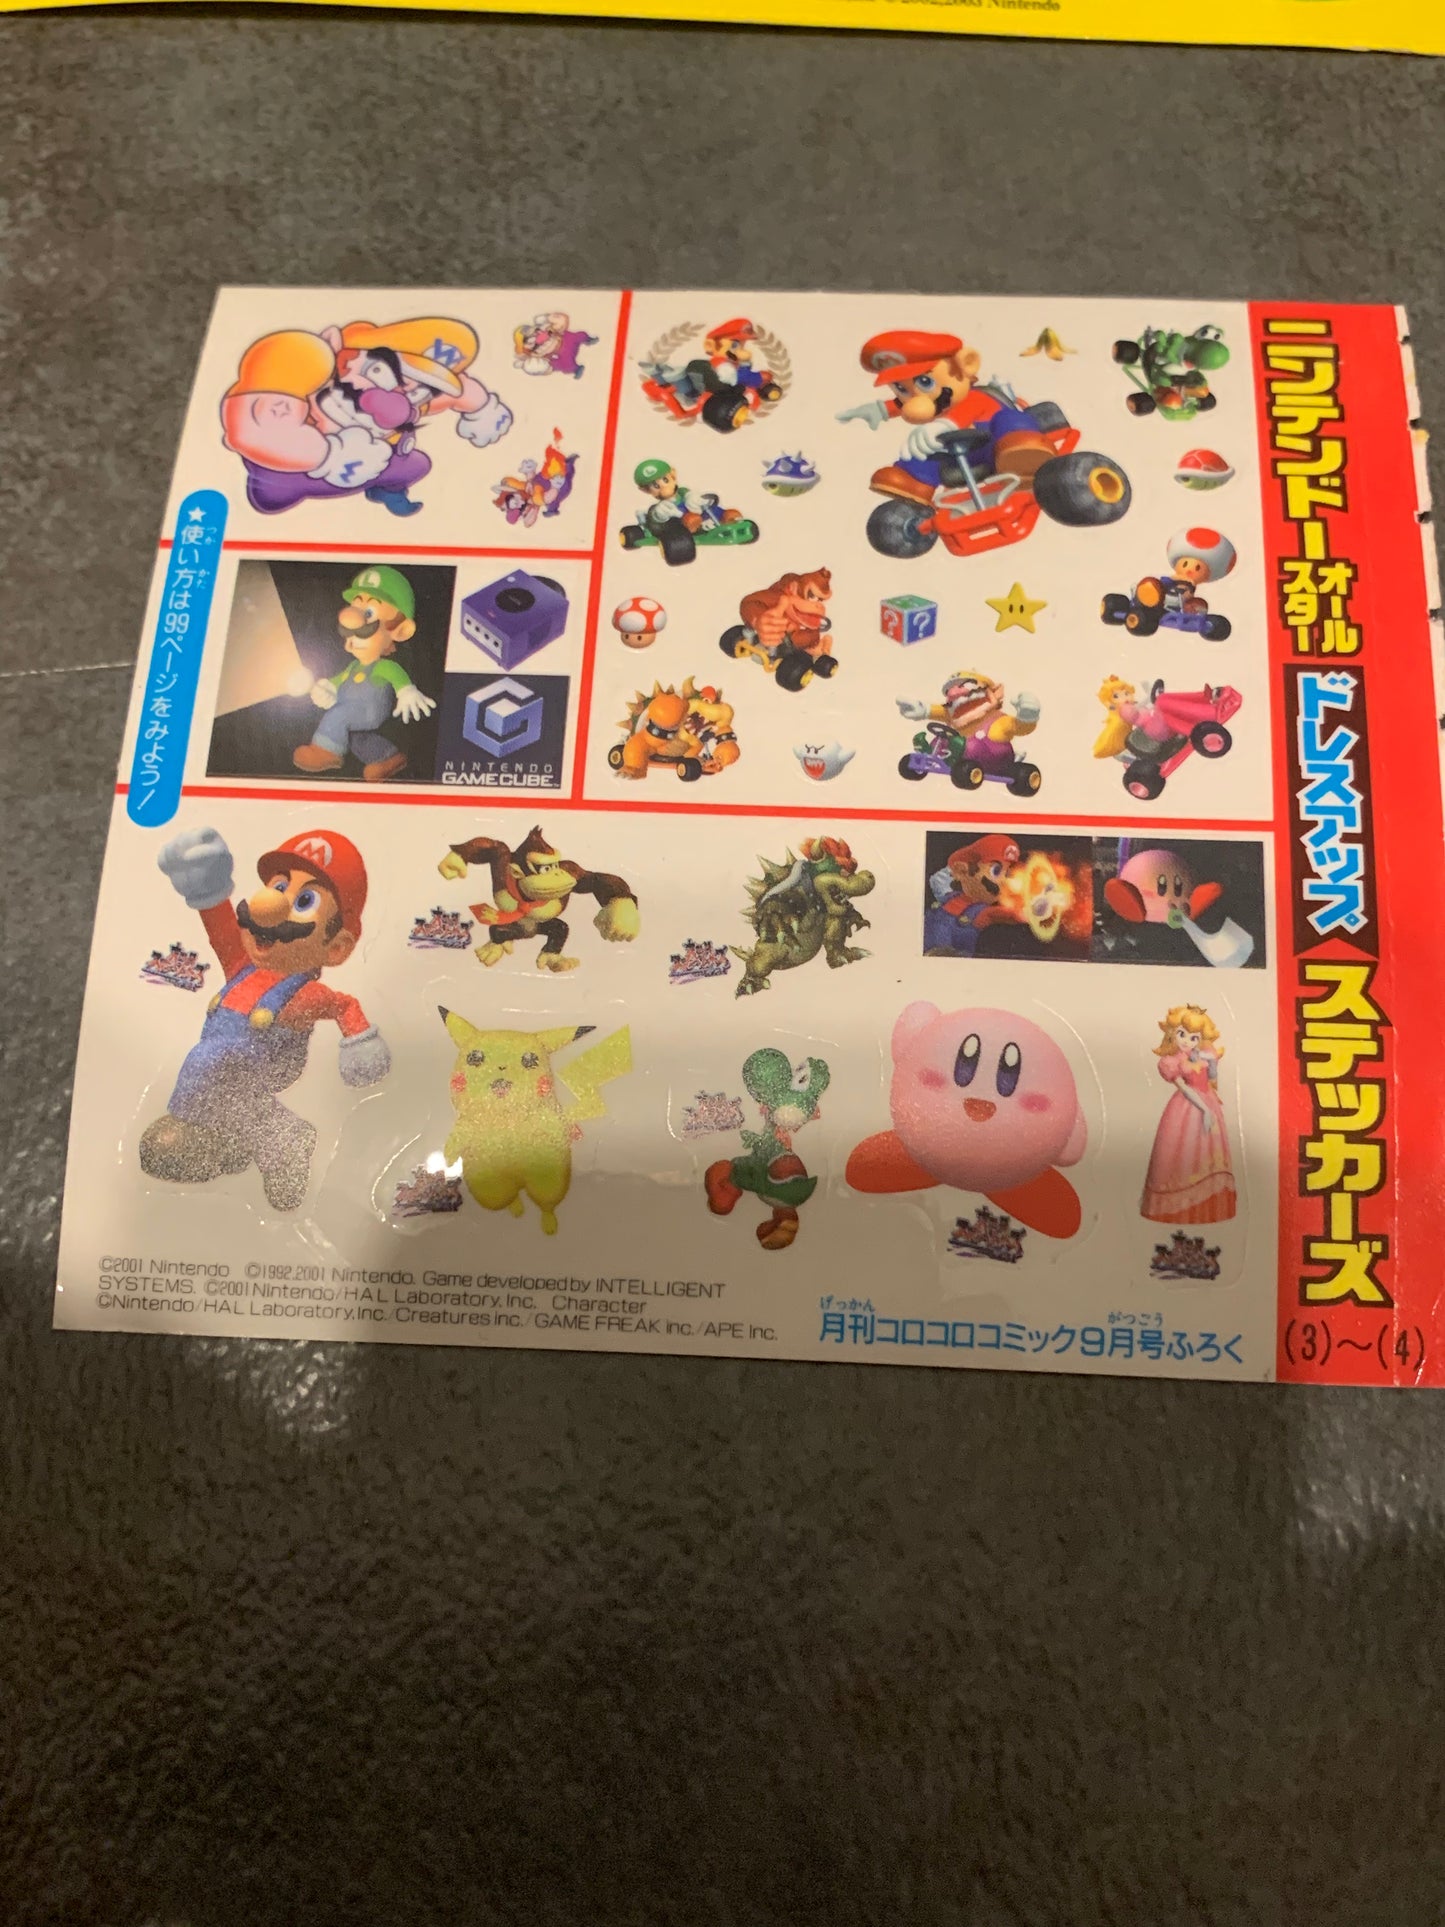 Super Smash Bros Melee, Luigi’s Mansion, Wario & Mario Kart Promo Stickers